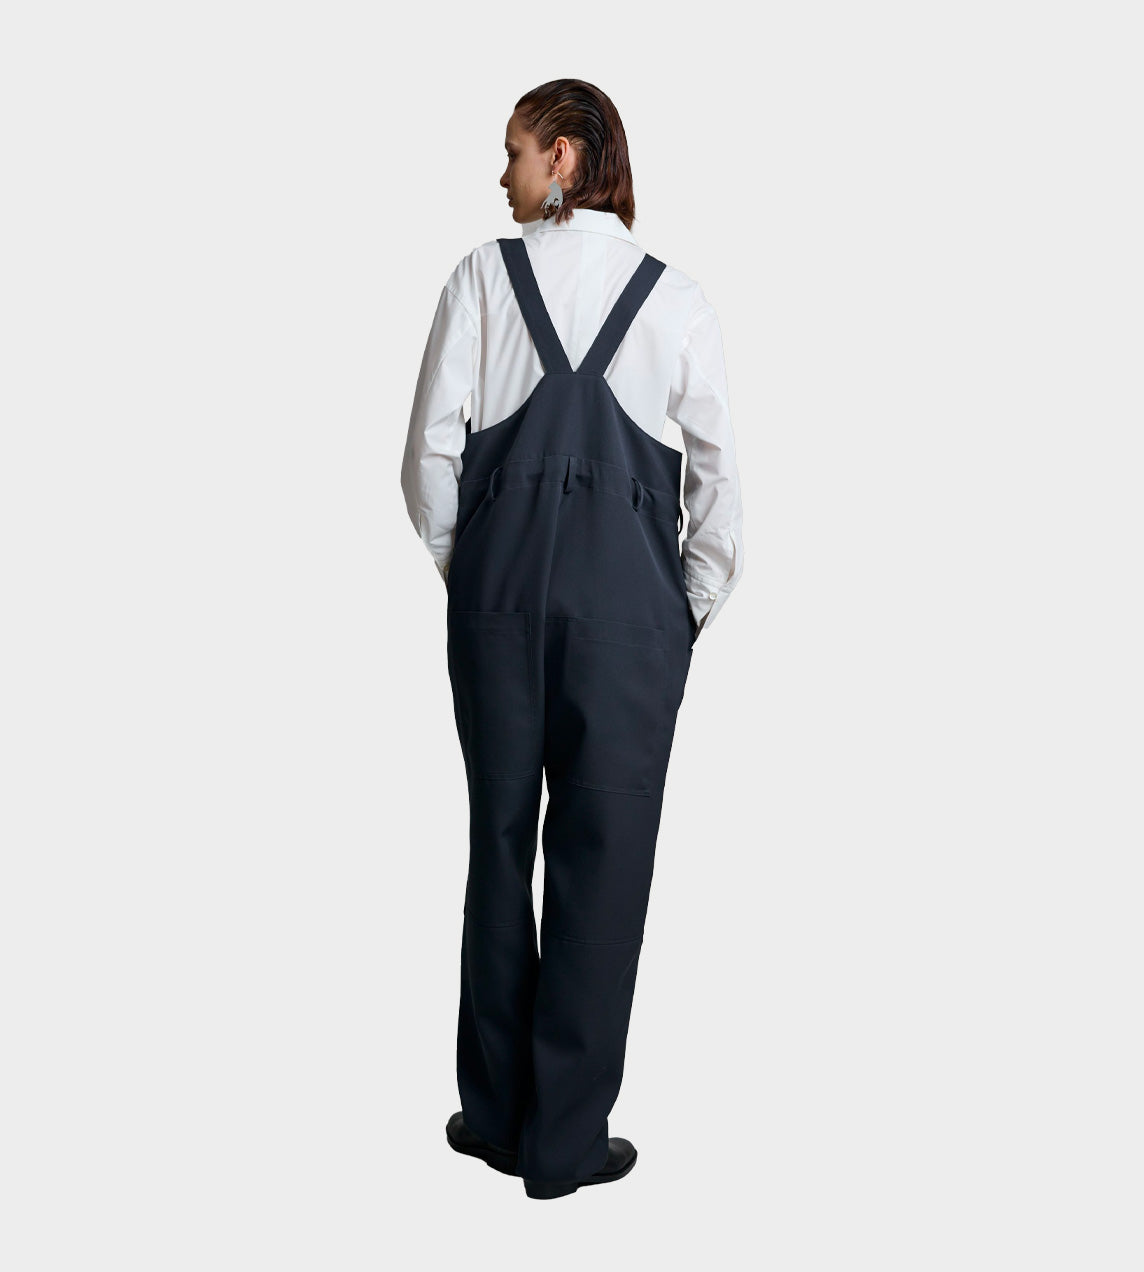 UJOH - Suspender Pant Black